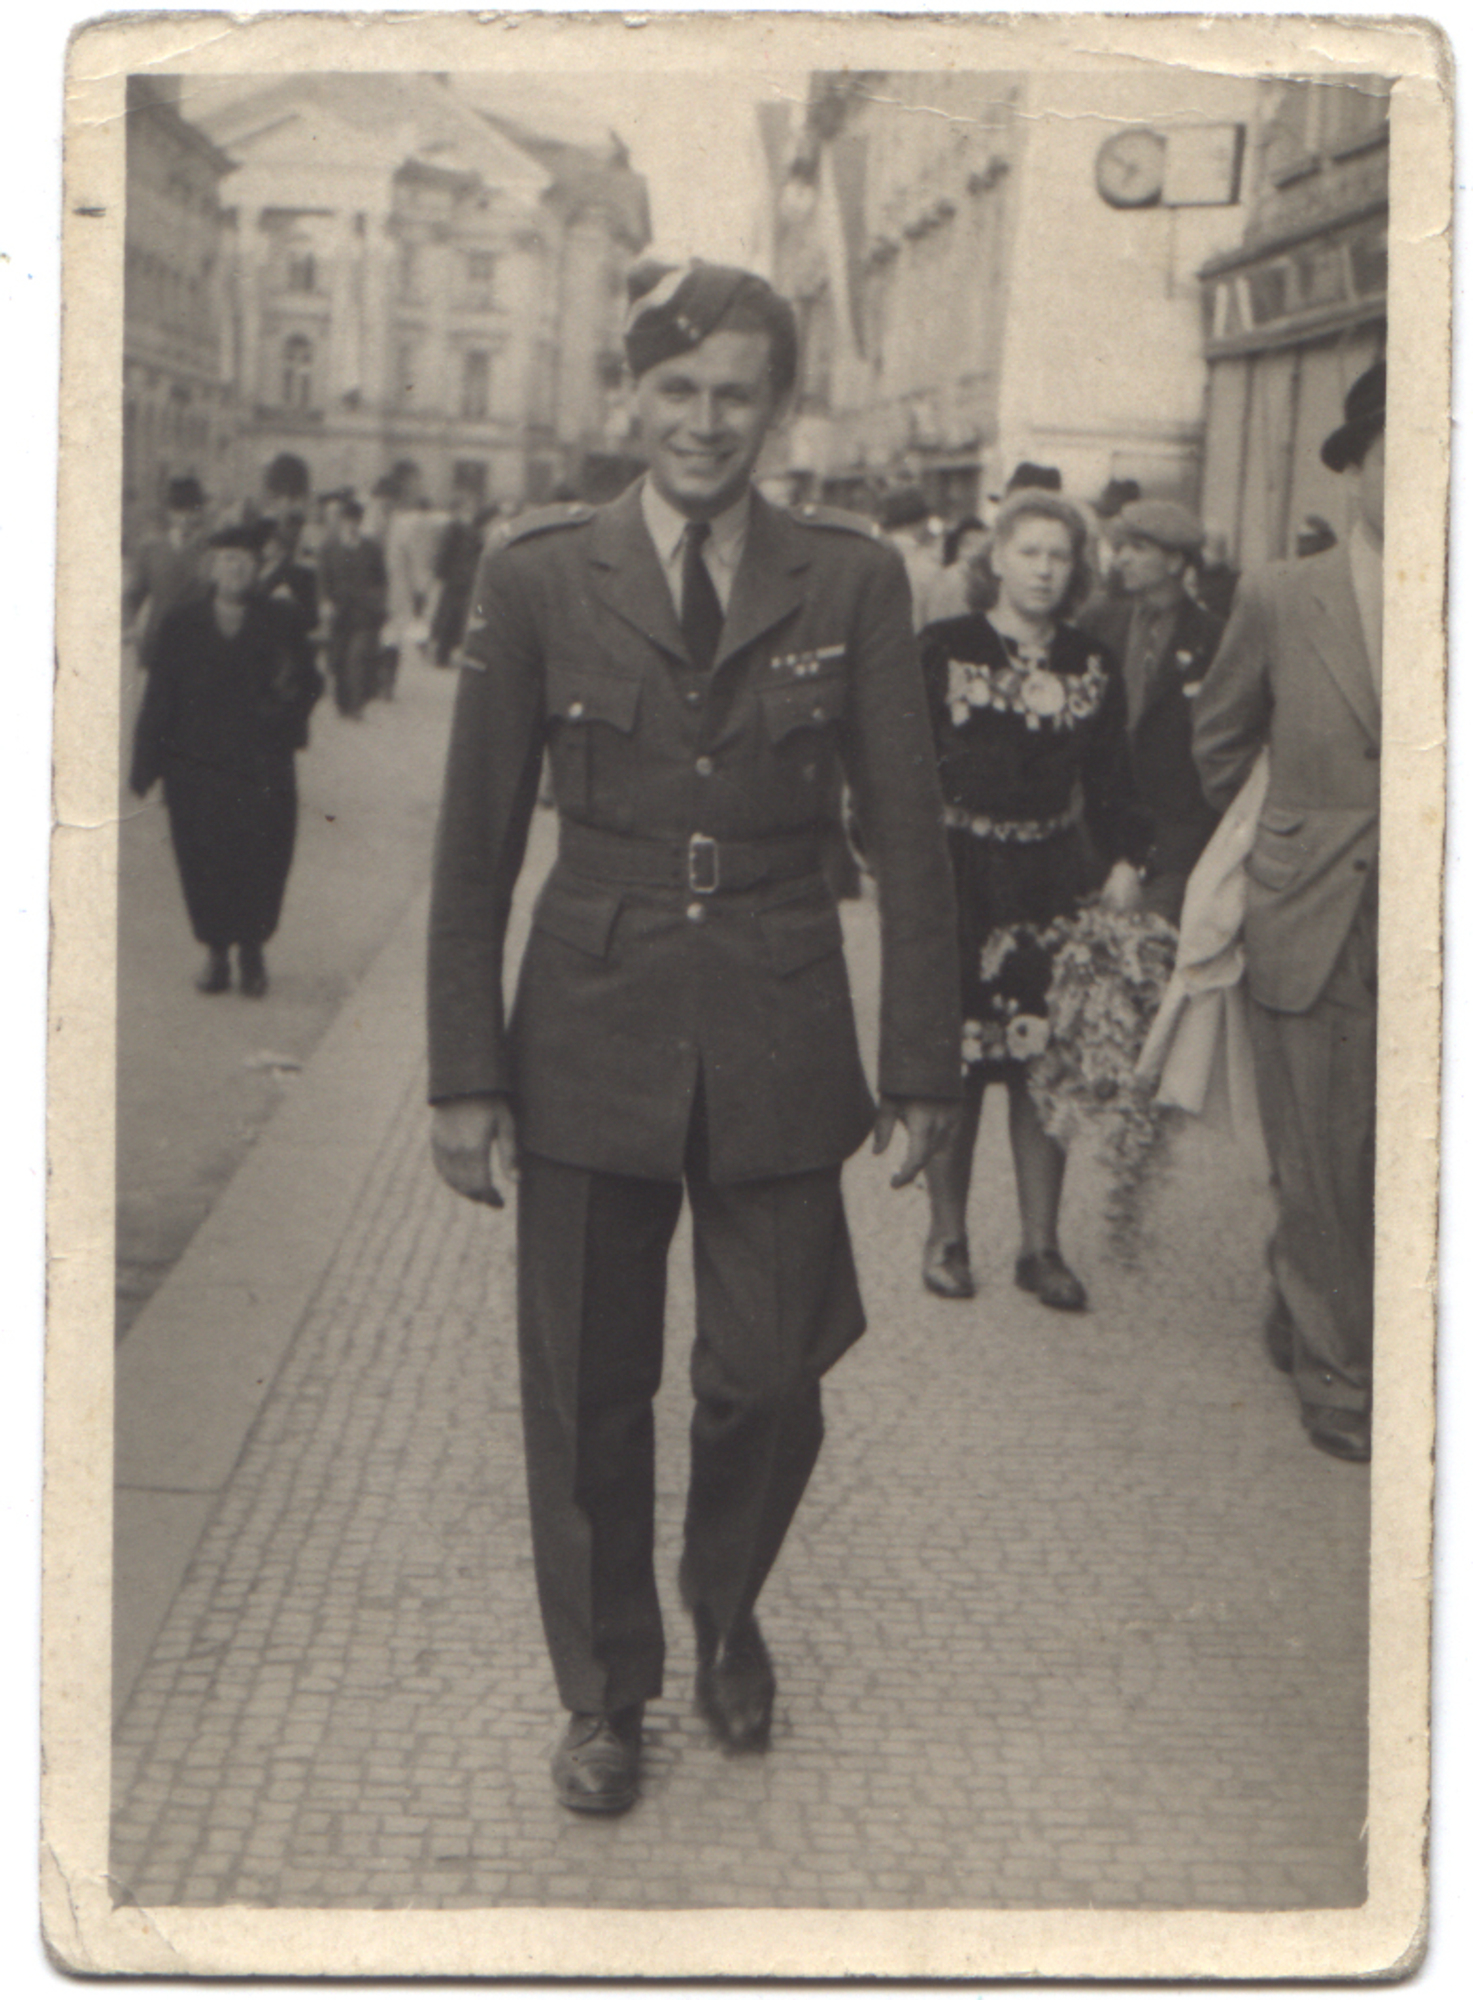 Chejstovský po návratu z Anglie, 1945